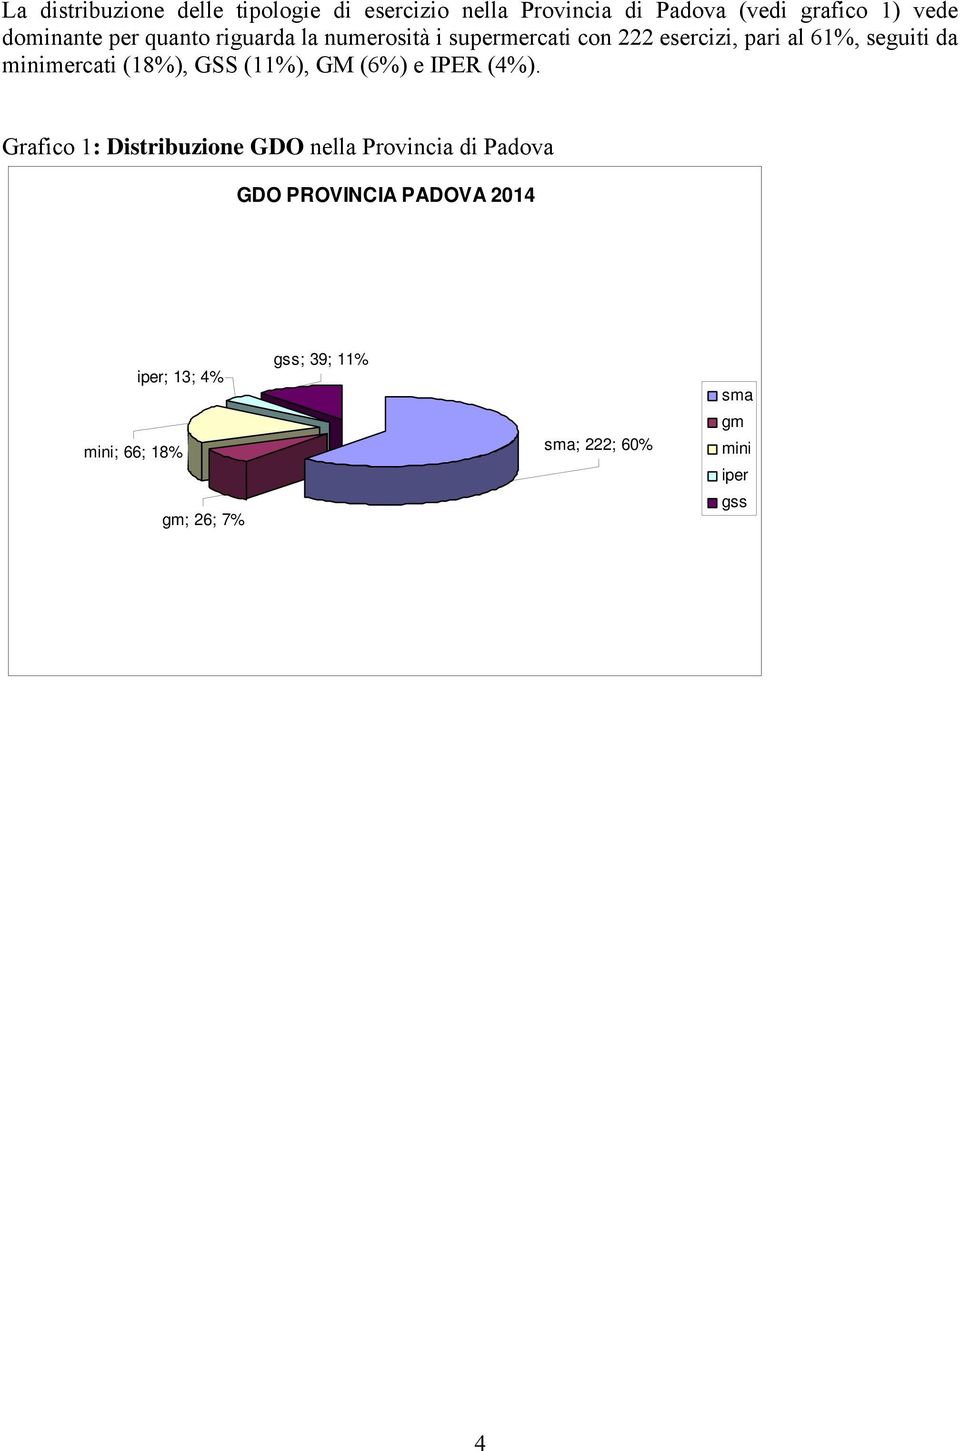 (18%), GSS (11%), GM (6%) e IPER (4%).